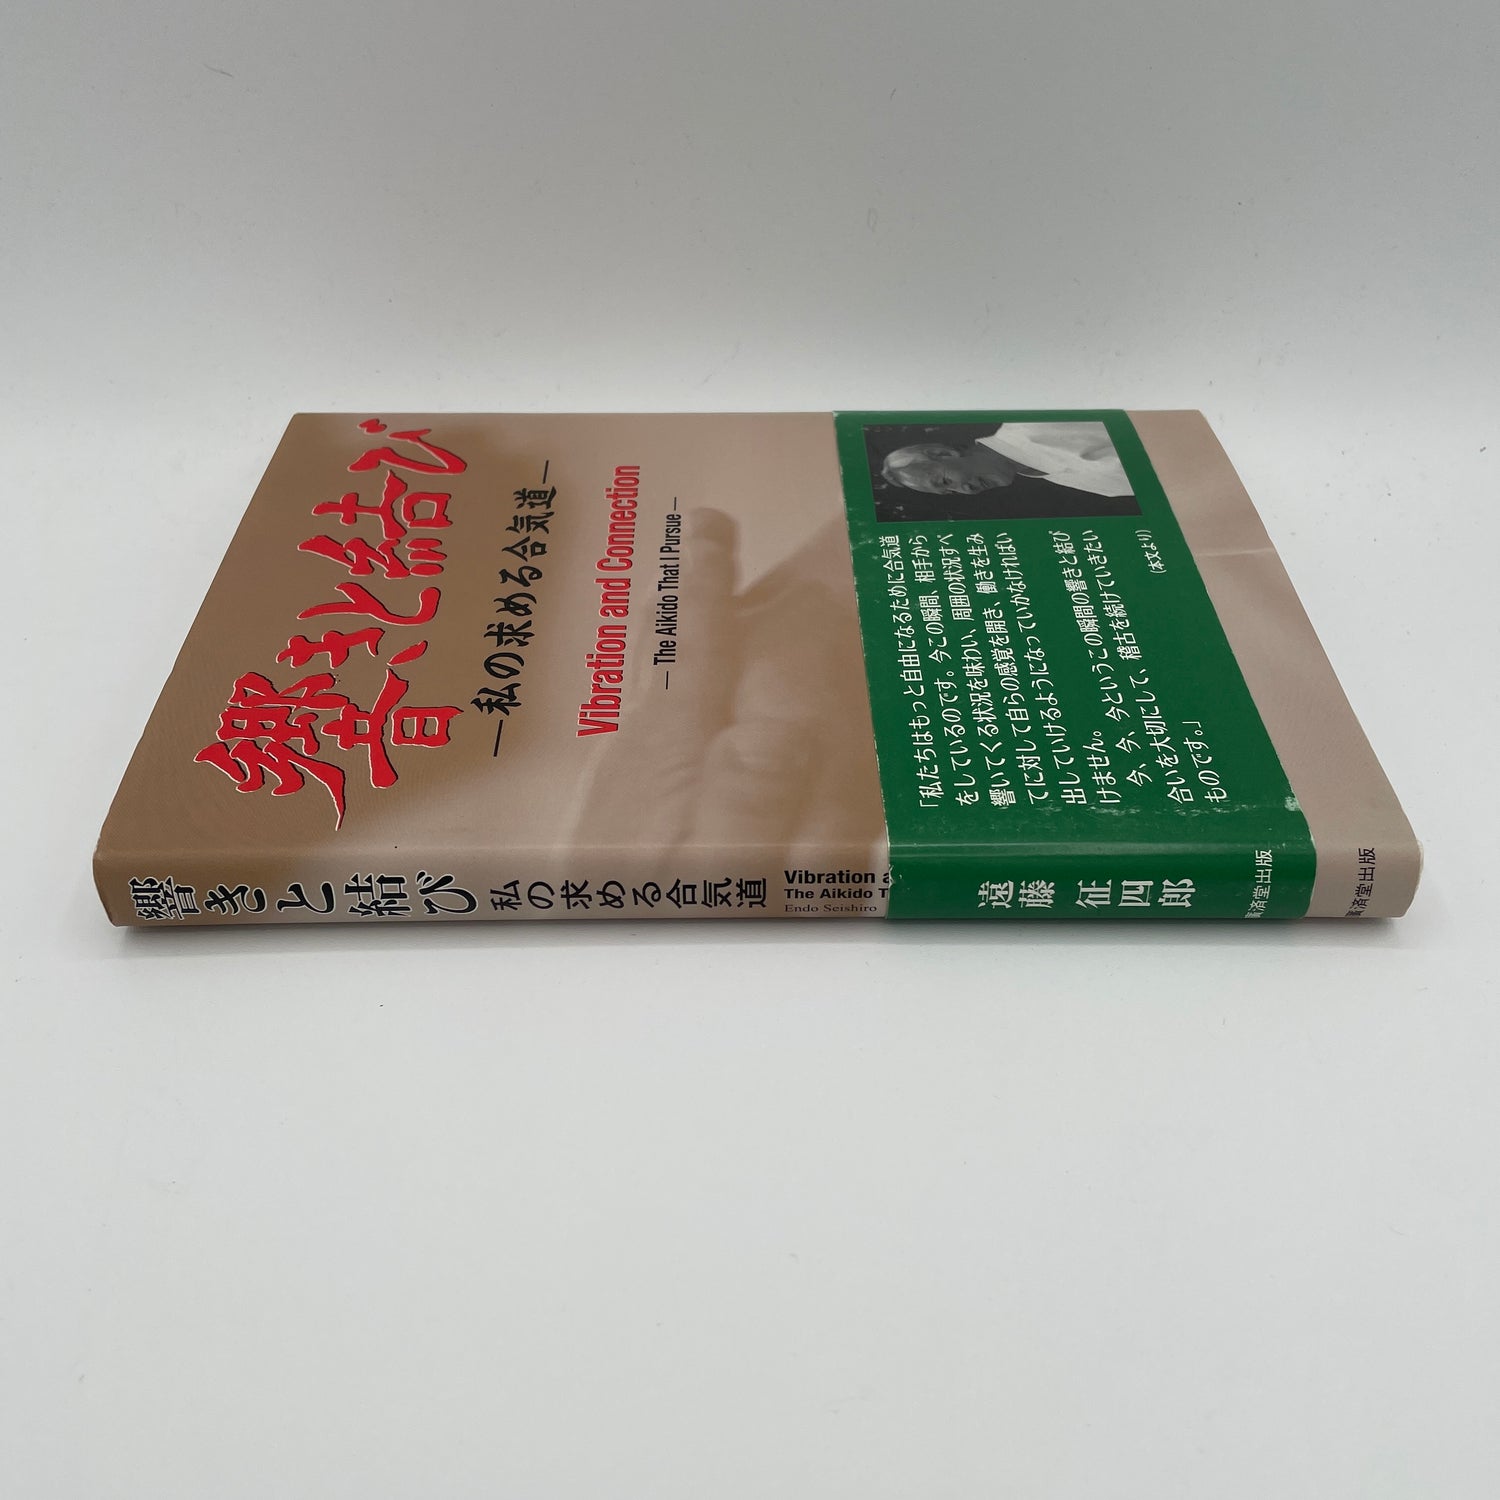 Vibración y conexión: El Aikido que persigo Libro de Seishiro Endo (Usado)